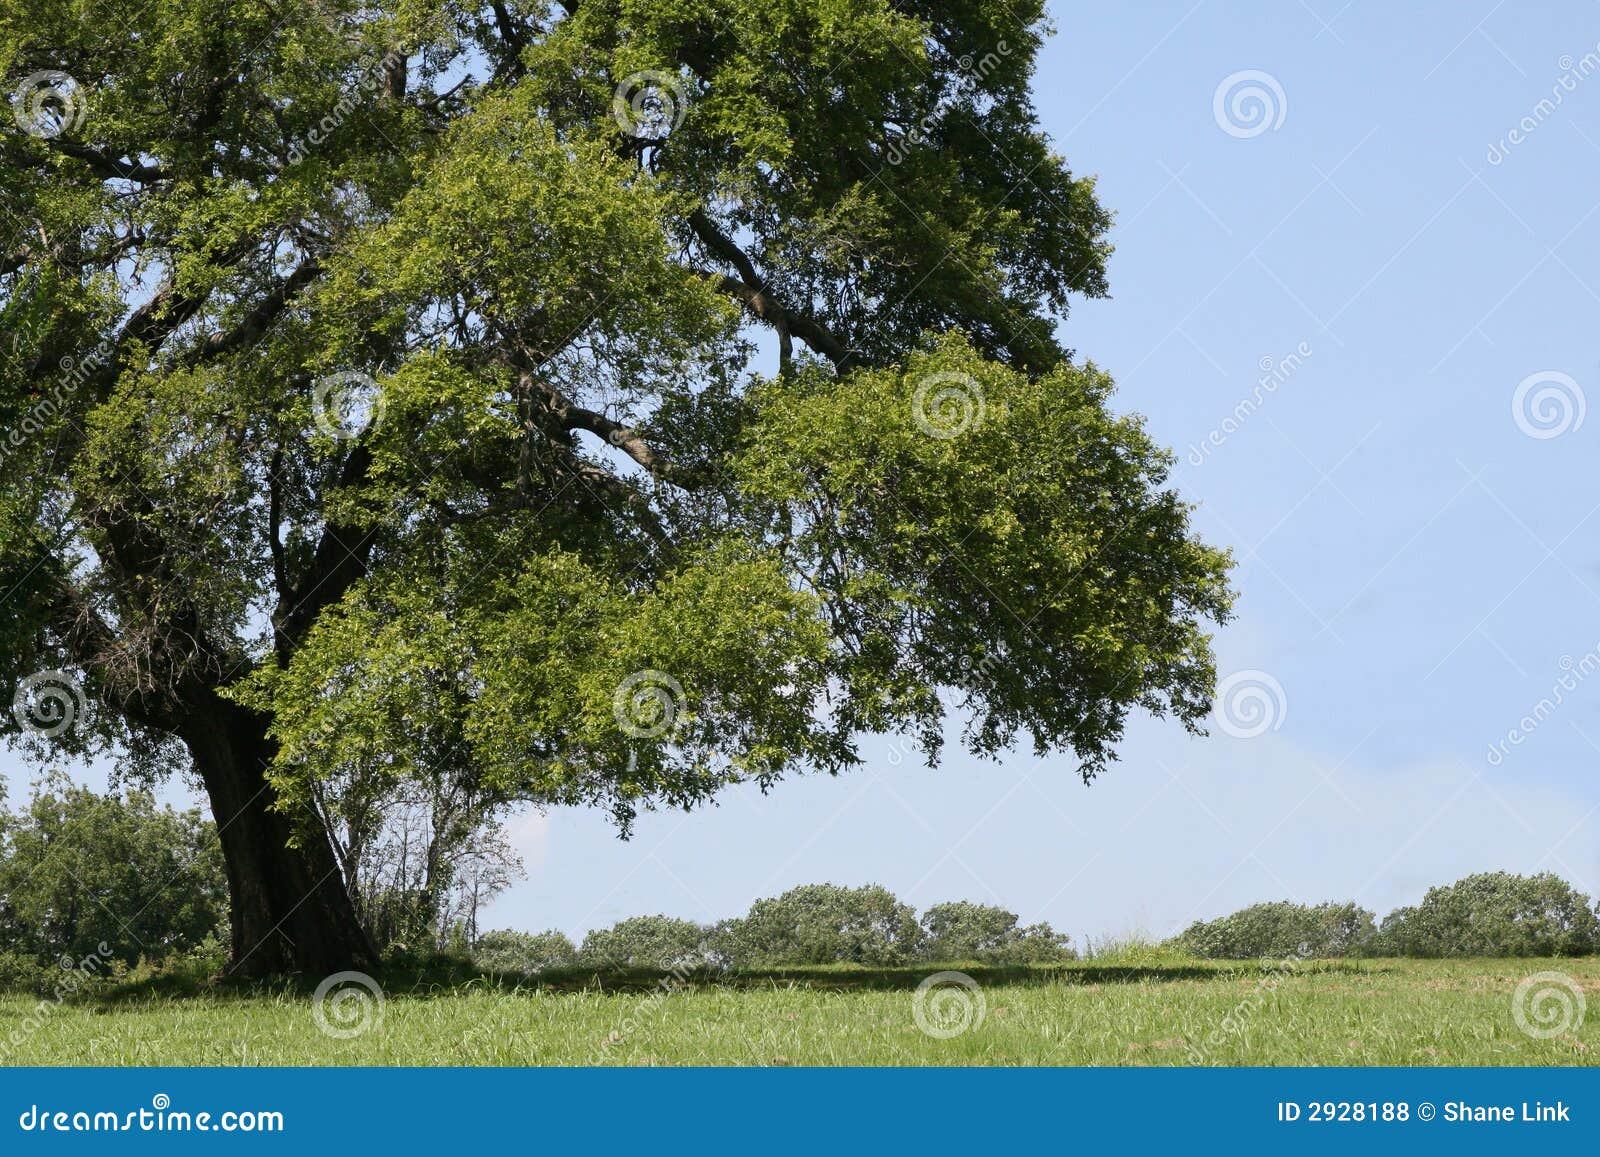 big shade tree